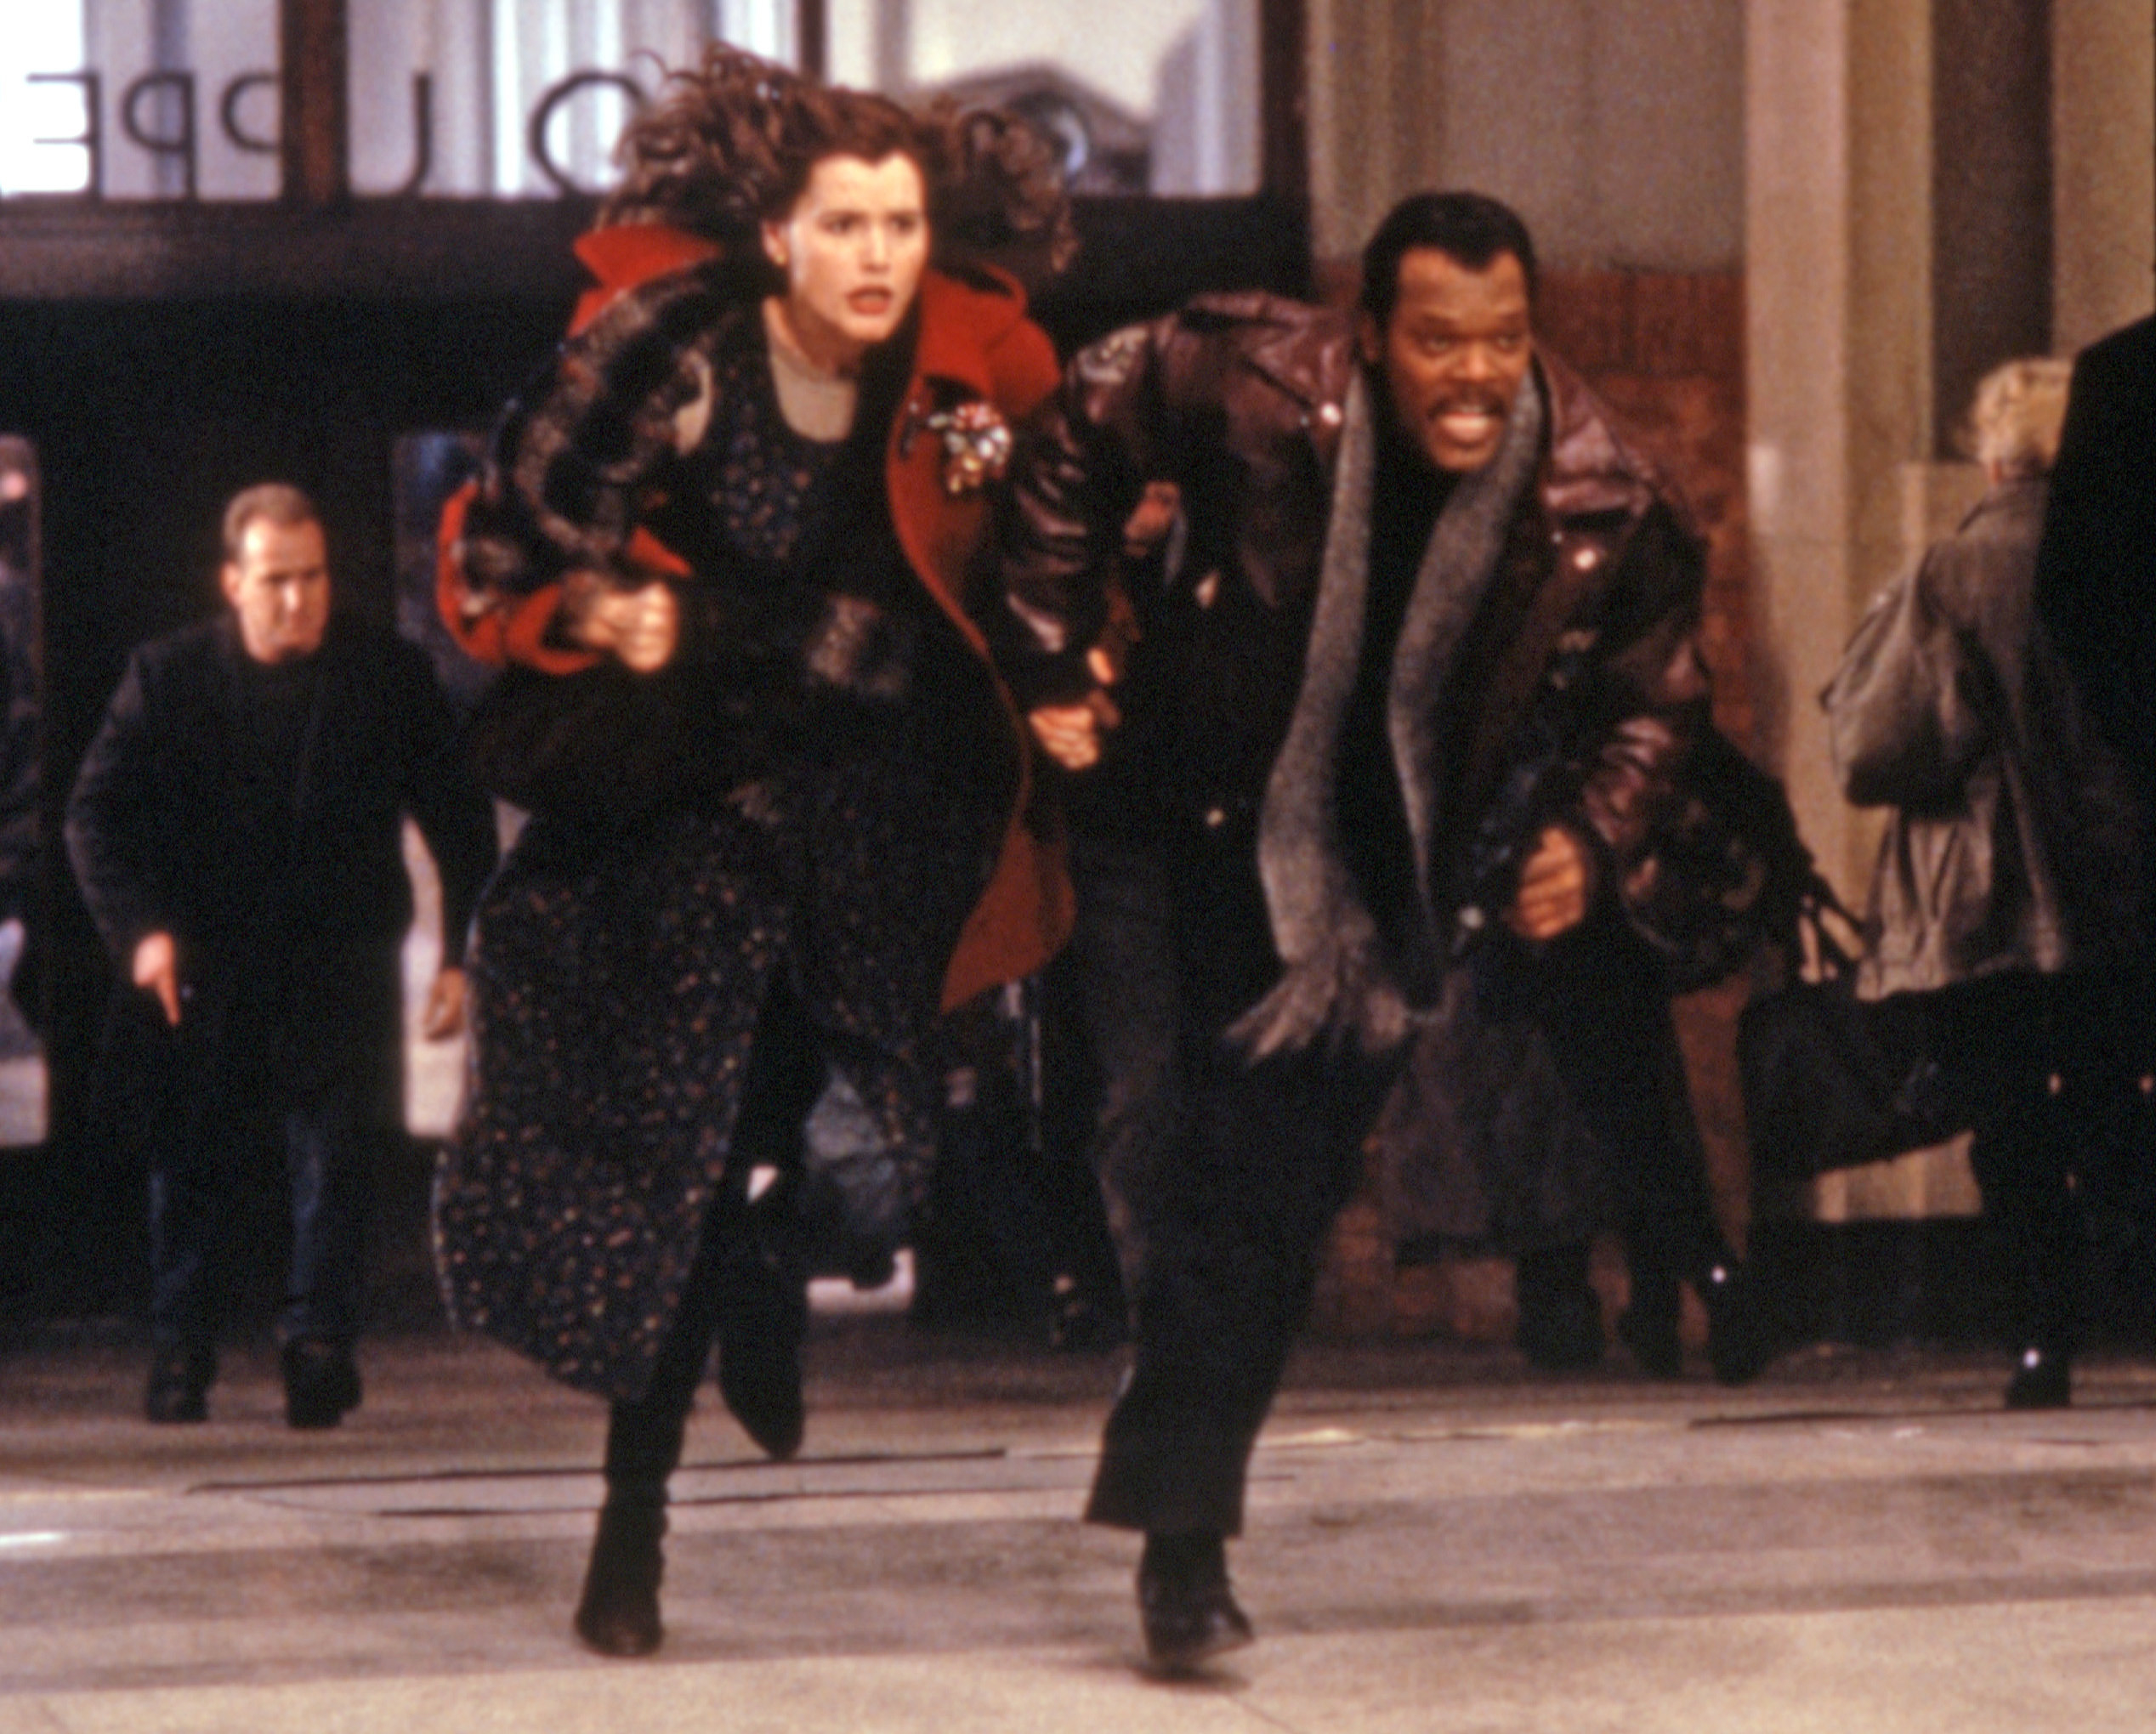 Geena Davis and Samuel L. Jackson run into the street as Samantha and Meet